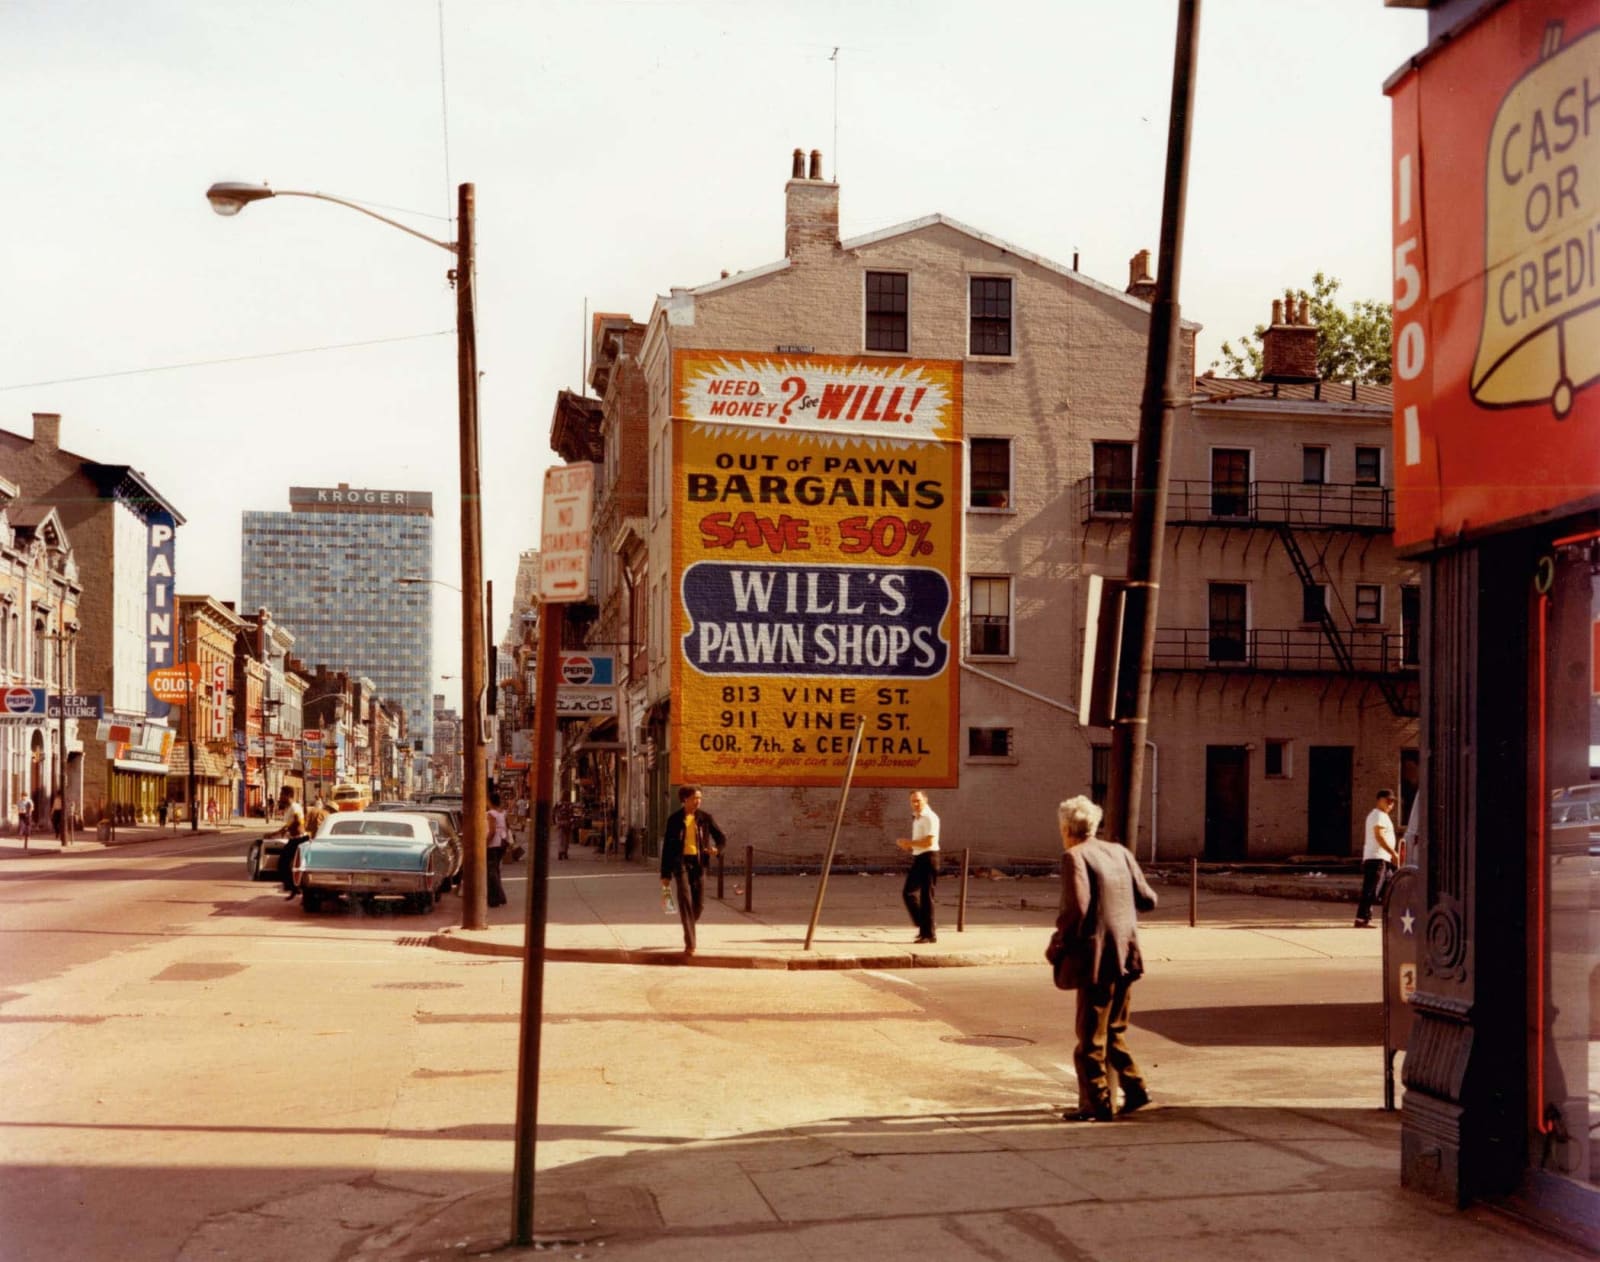 Stephen Shore, West 15th Street and Vine Street, Cincinnati, Ohio, May 15, 1974